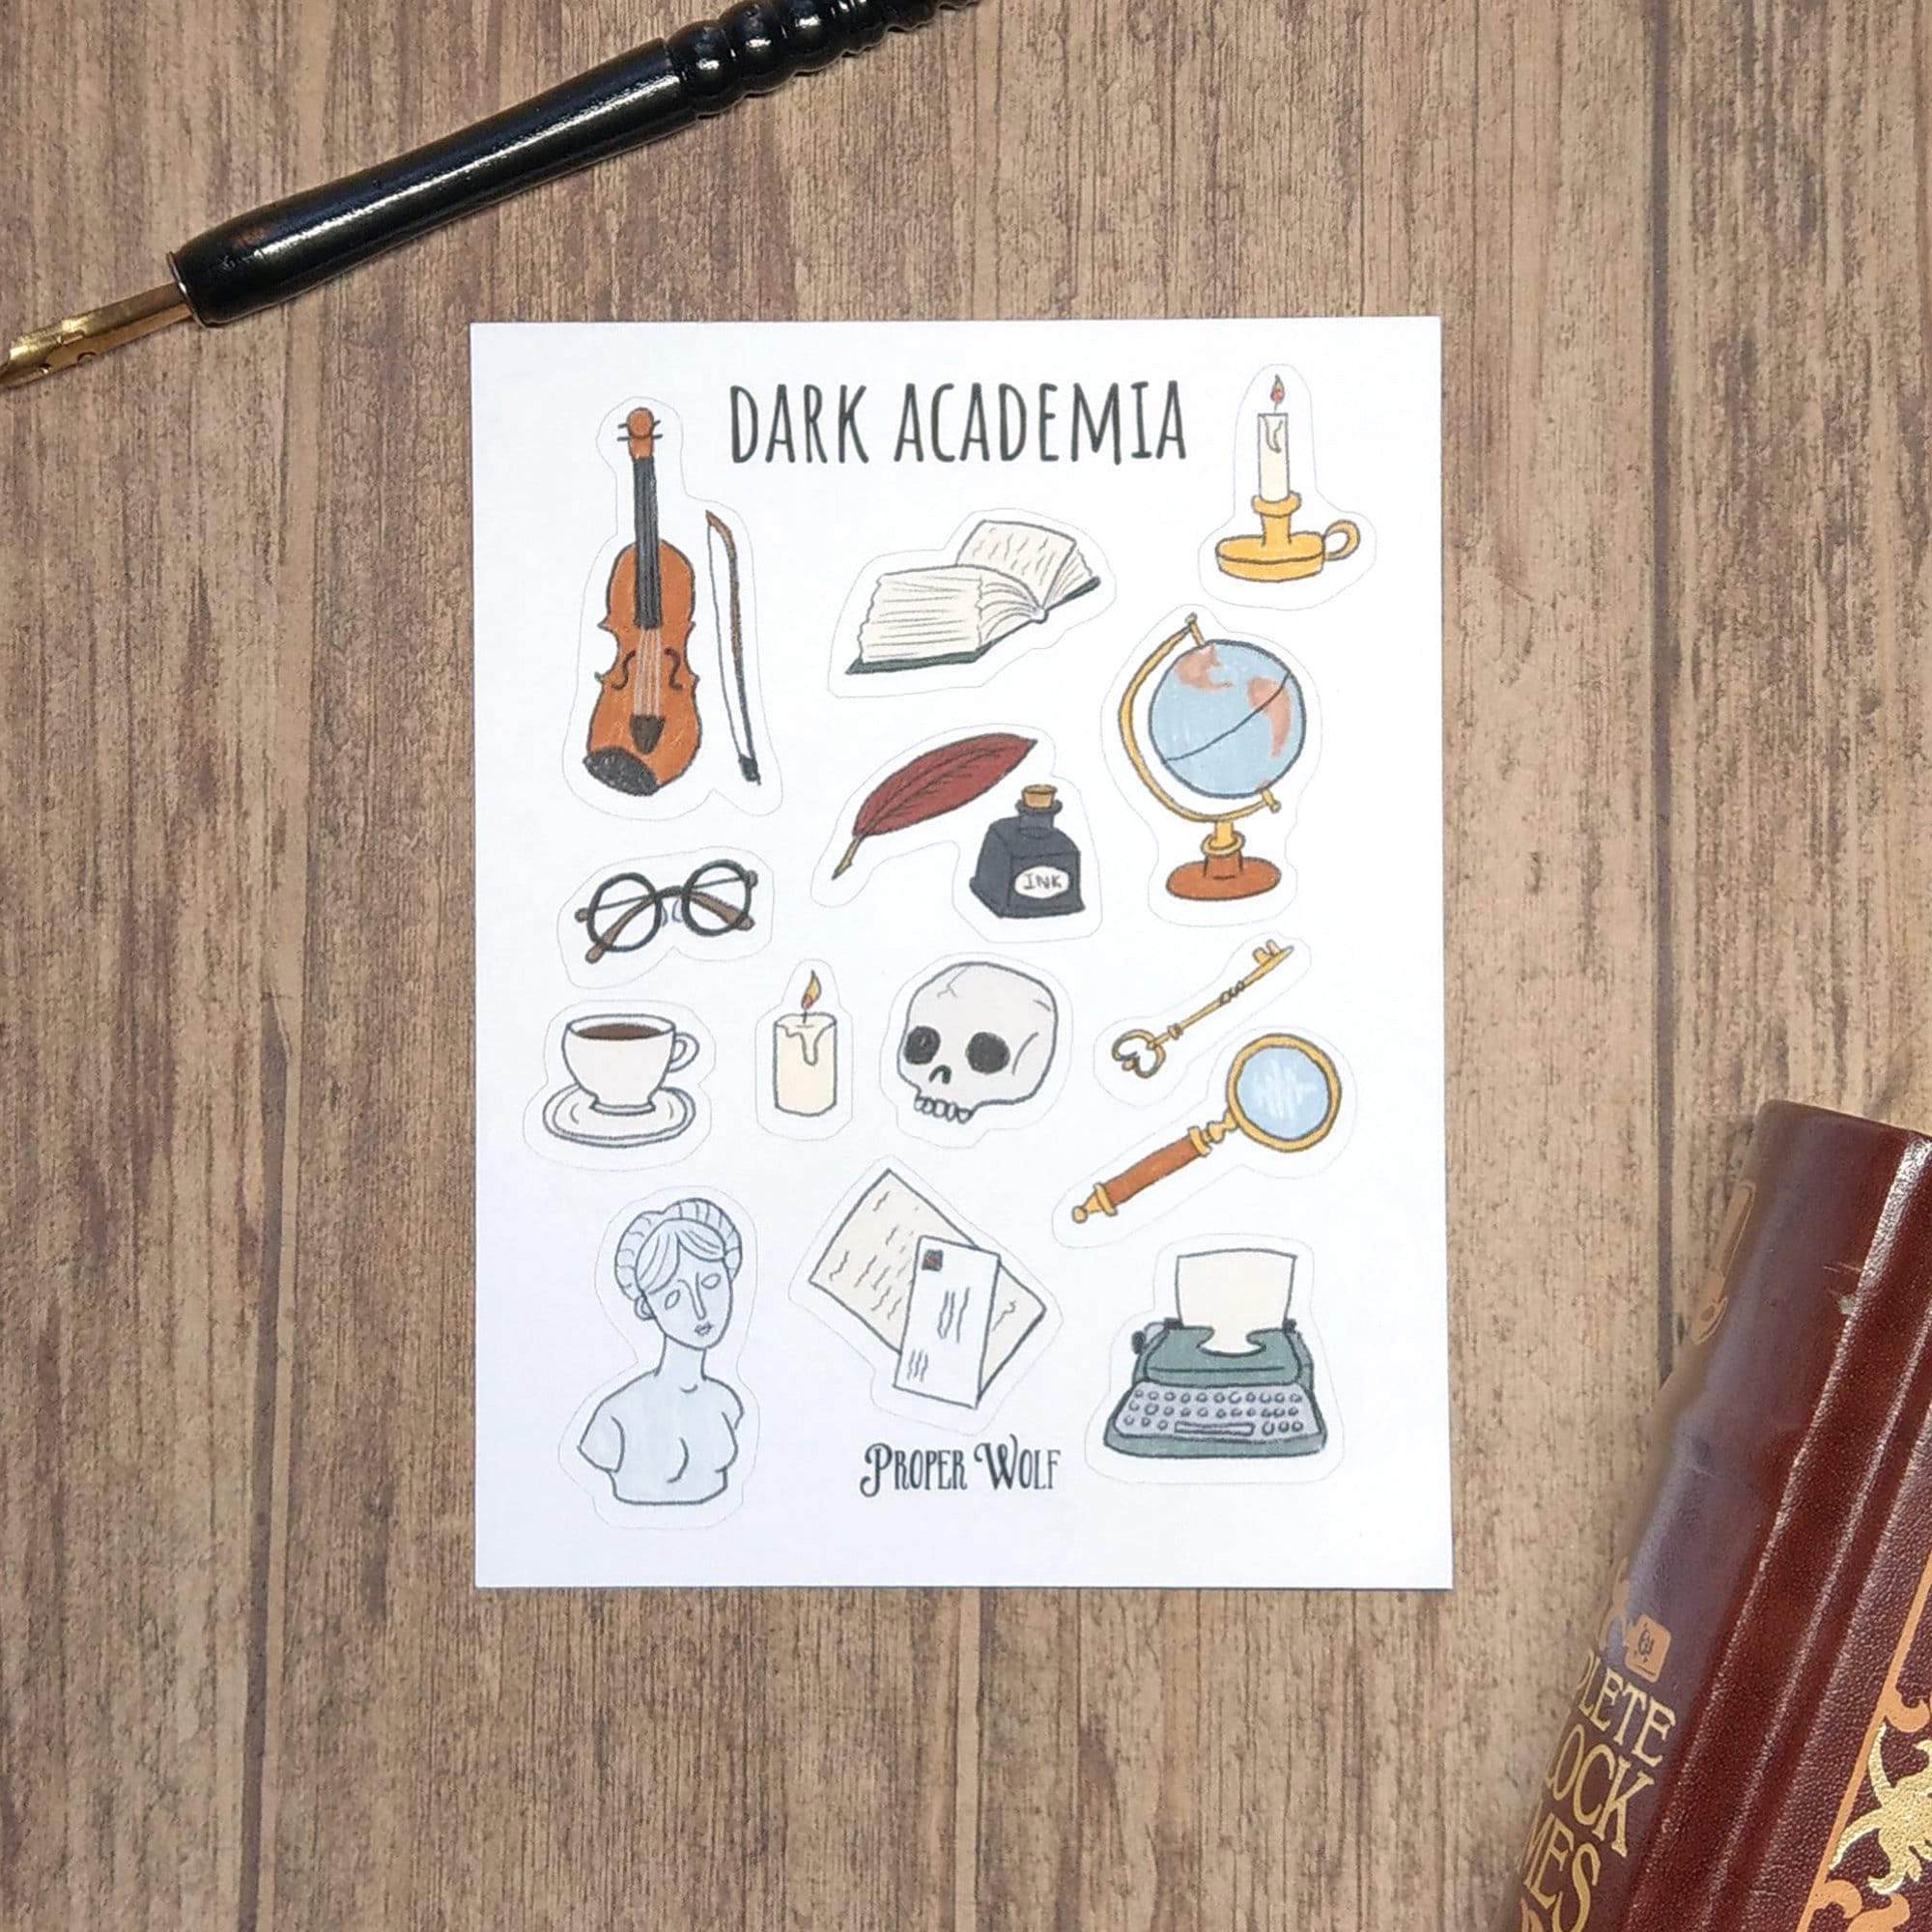 Dark Academia Sticker Sheet Bundle - Wishupon